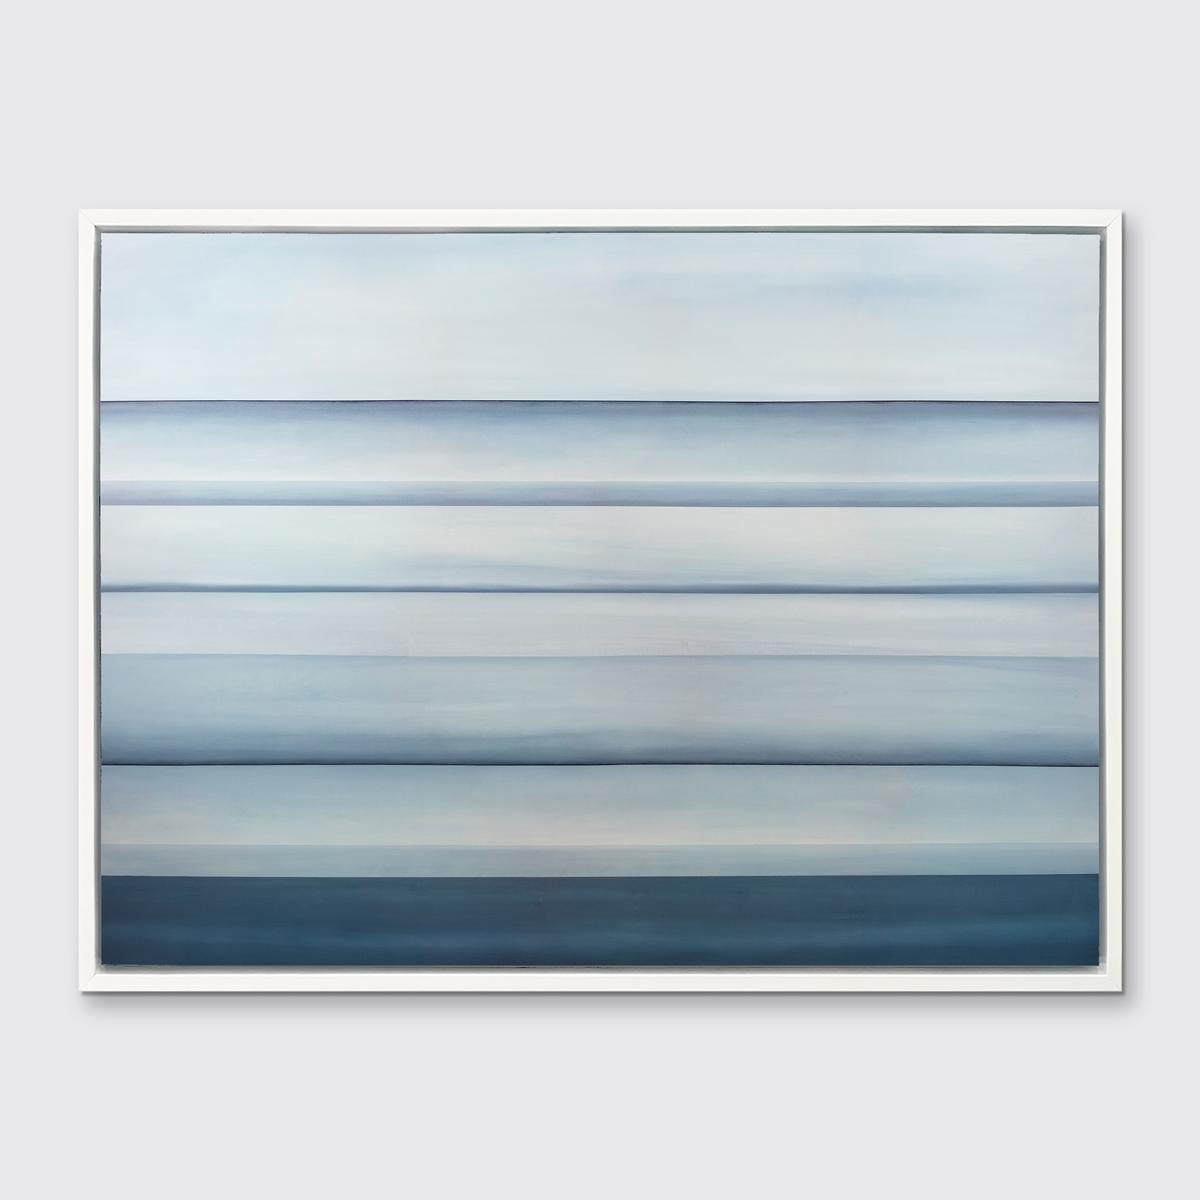 Tony Iadicicco Abstract Print - "Each Step" Framed Limited Edition Giclee Print, 30" x 40"